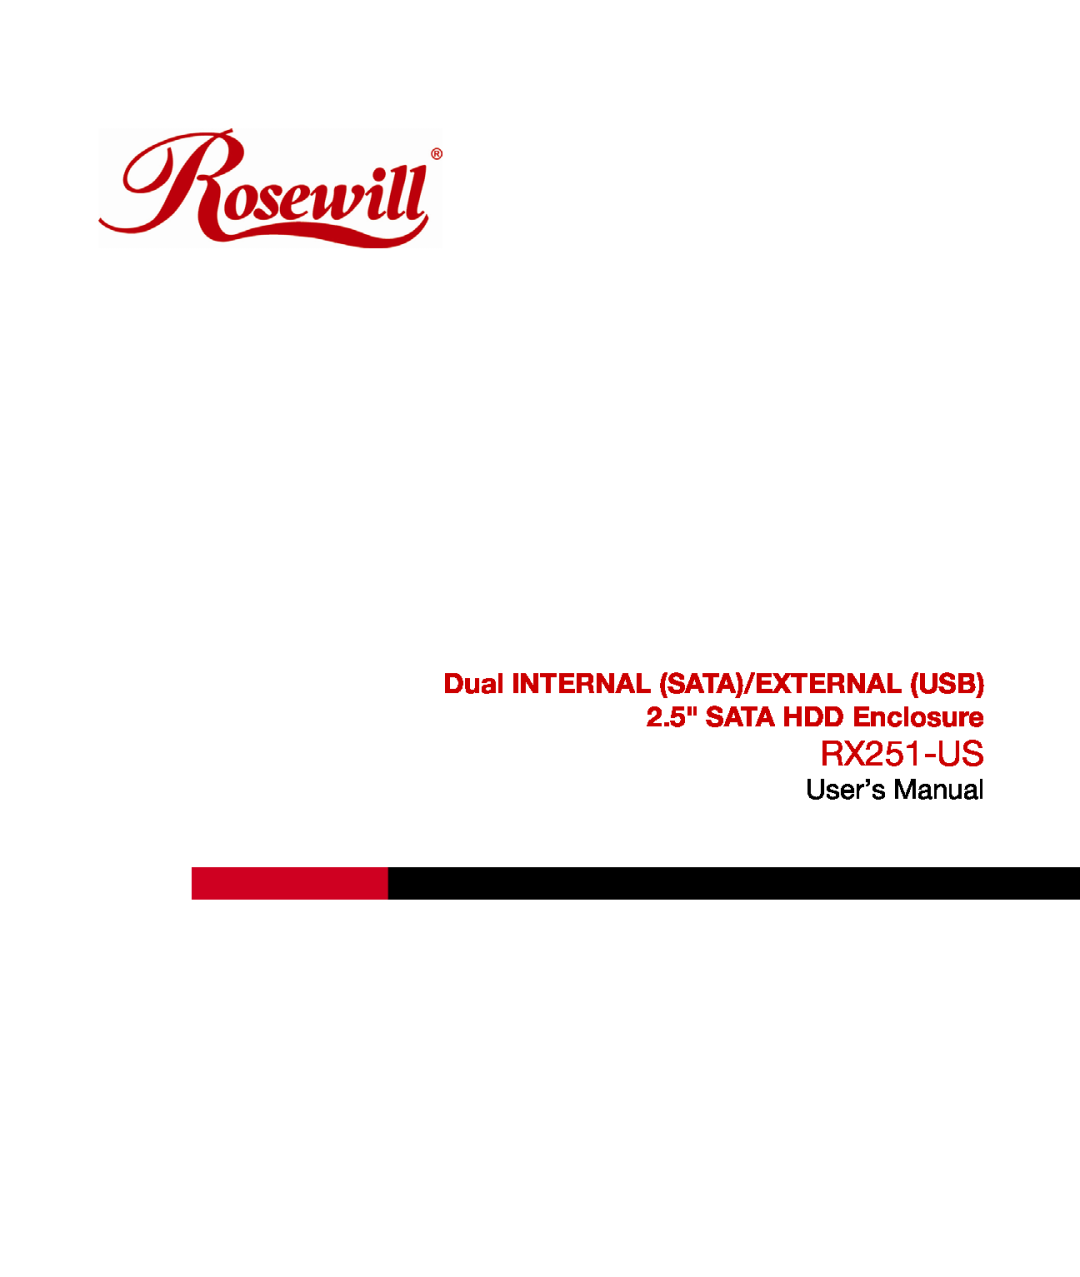 Rosewill RX251-US user manual User’s Manual, Dual INTERNAL SATA/EXTERNAL USB 2.5 SATA HDD Enclosure 